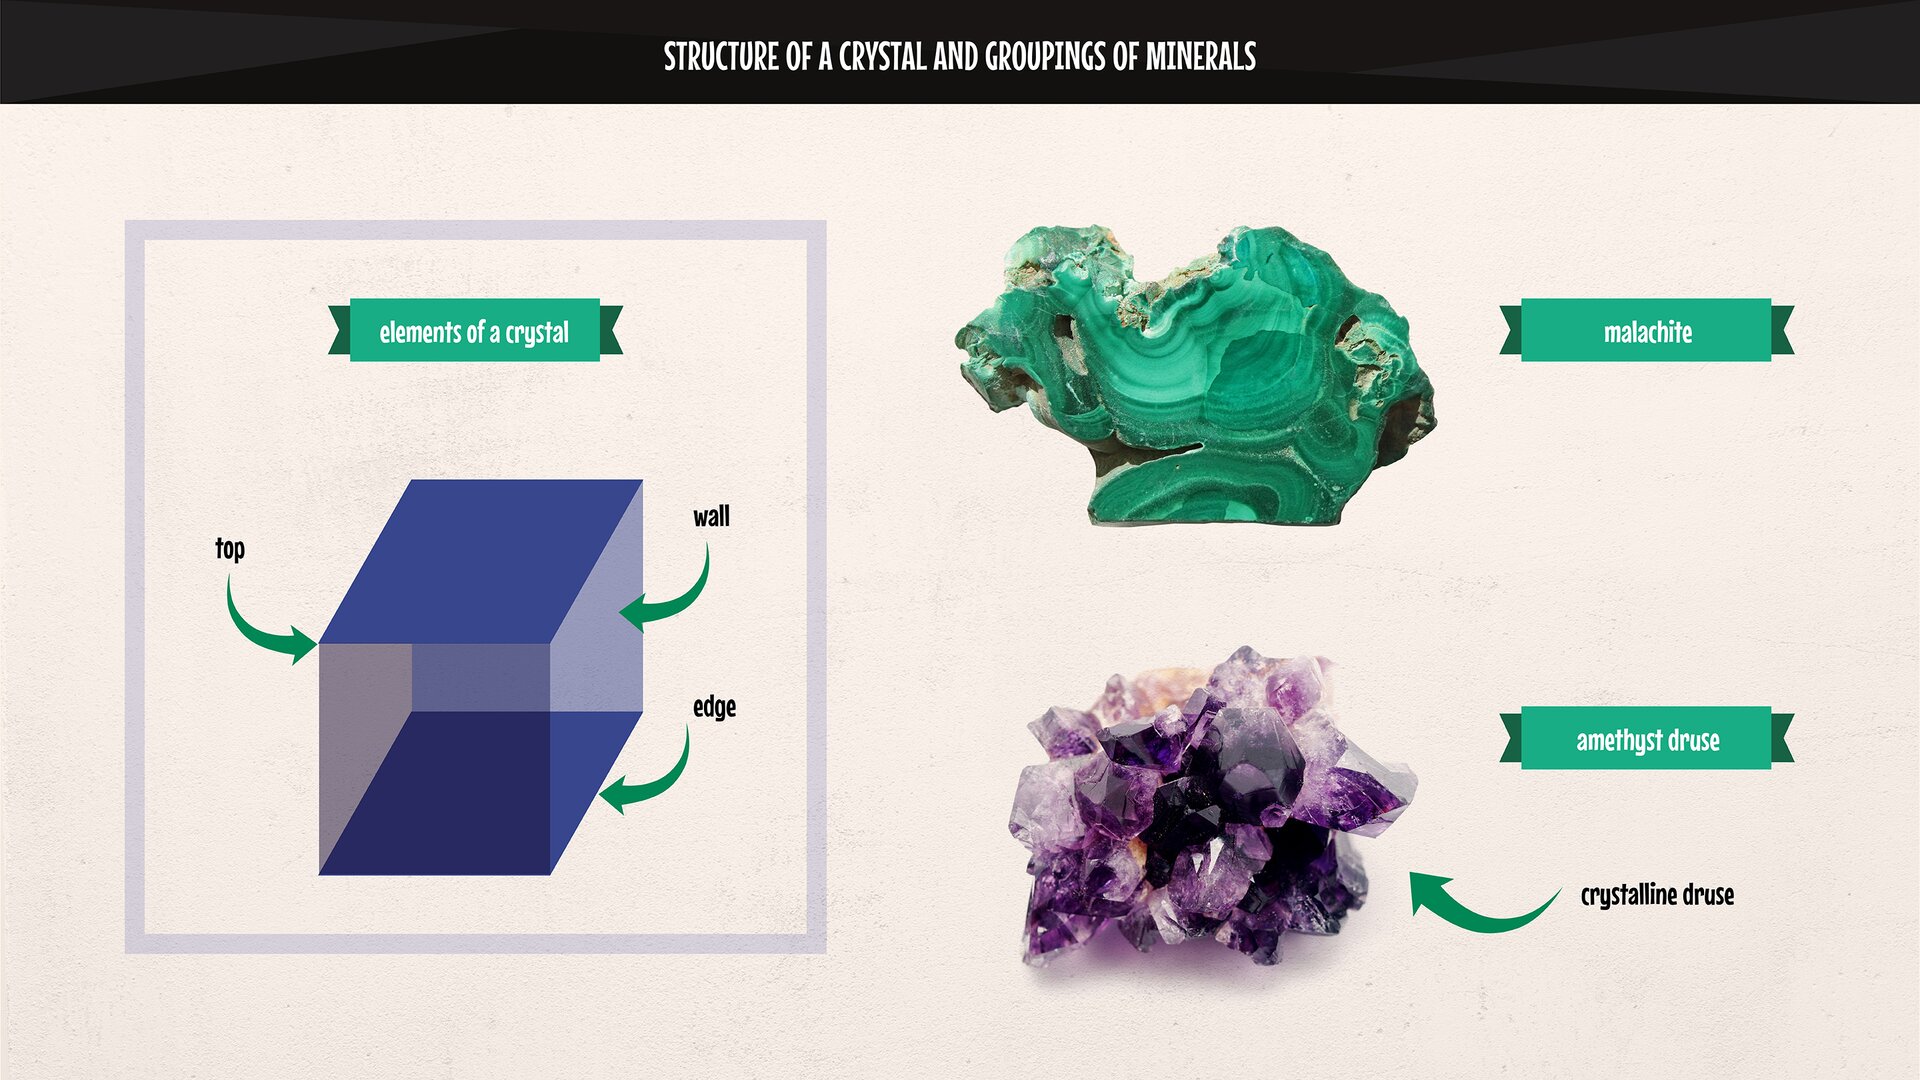 The image presents the structure of a crystal and its element. Rysunek przedstawia budowę kryształu i jego elementy.